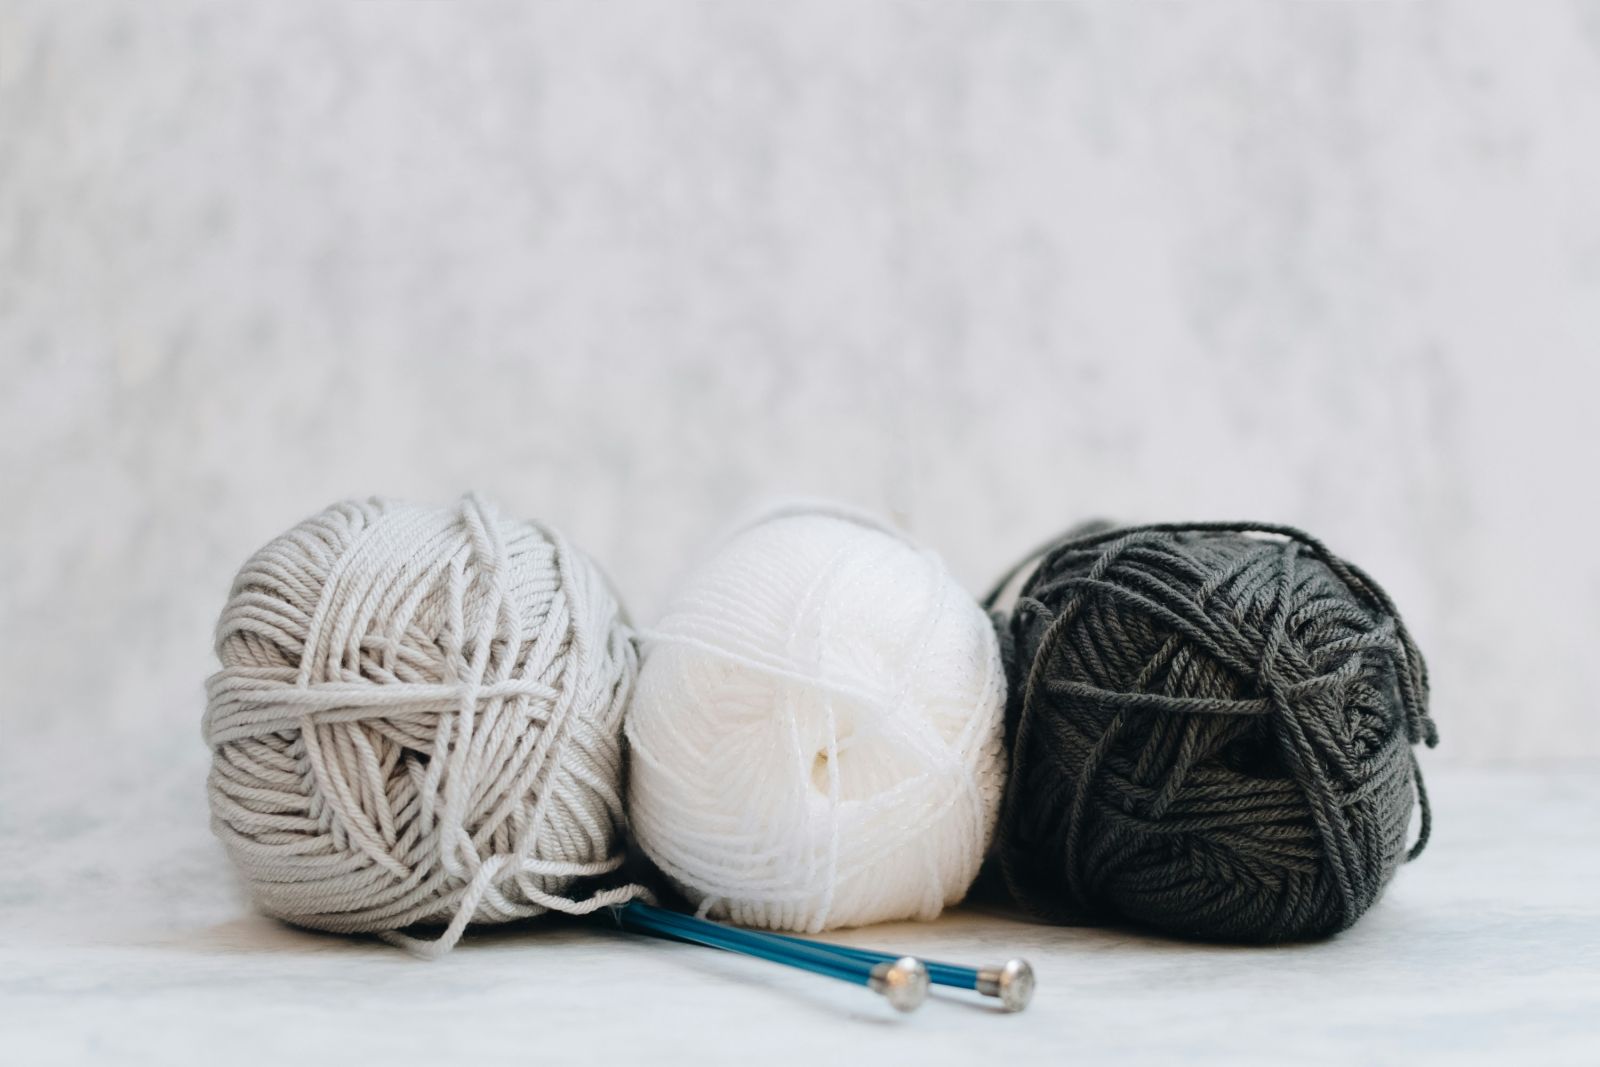 Cotton yarn via Kelly Sikkema via Unsplash